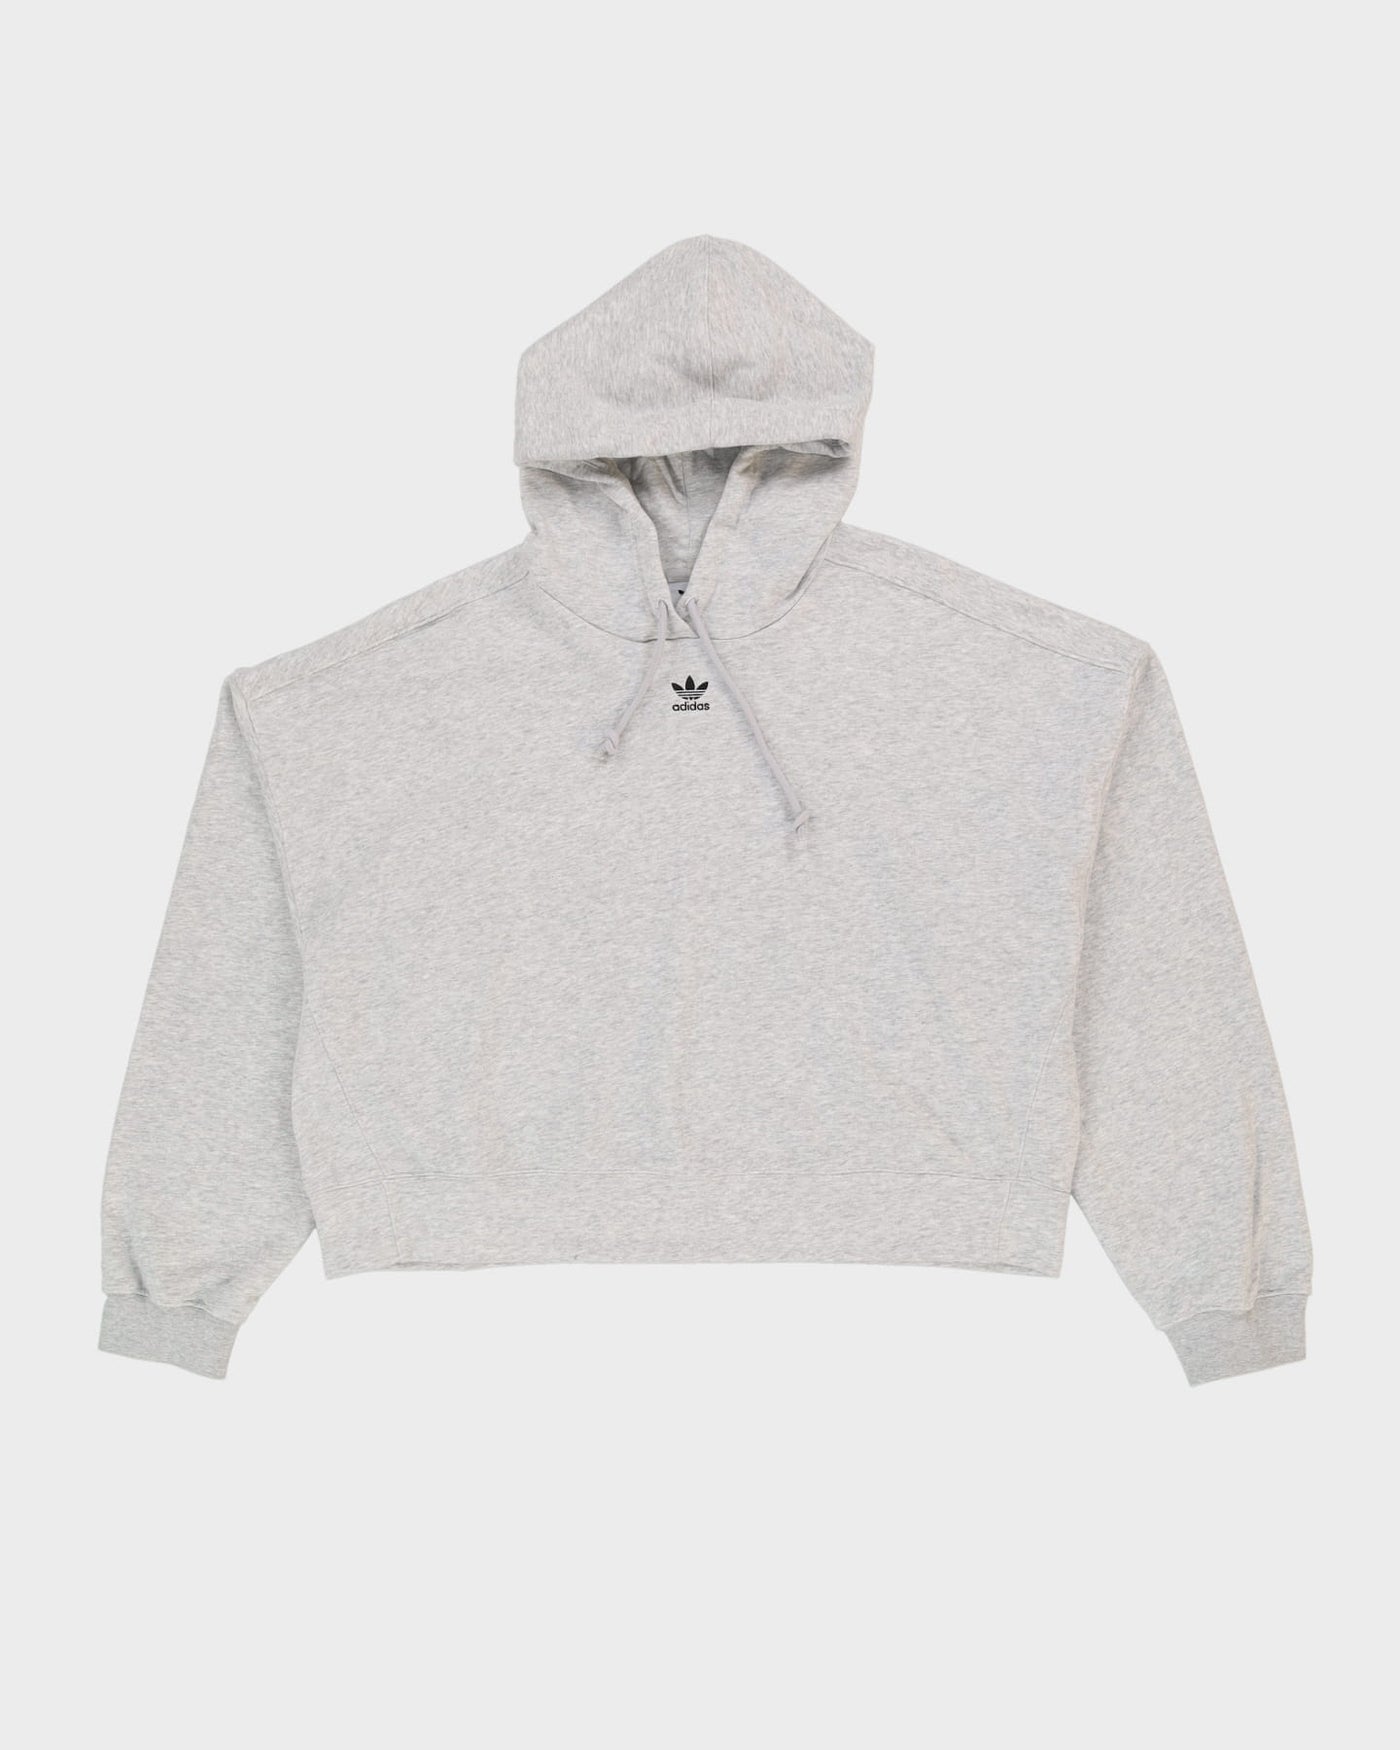 Adidas Cropped Fit Grey Hoodie - XL